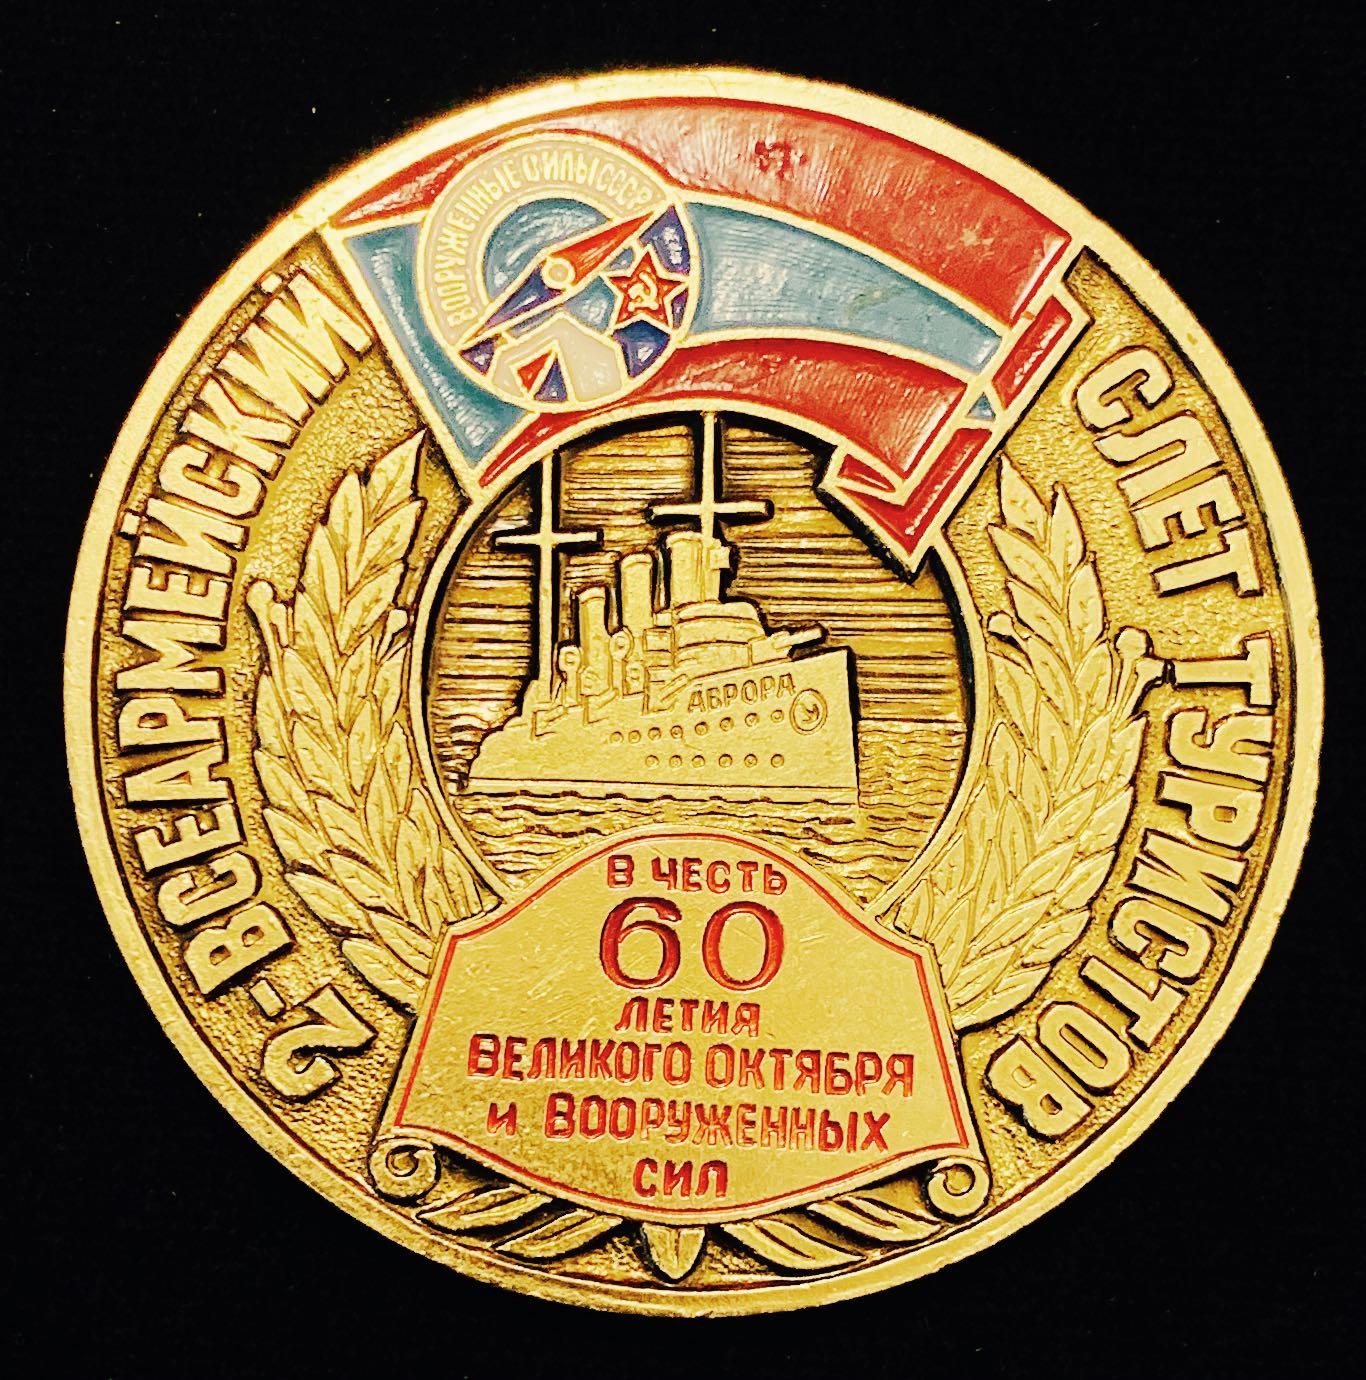 3 x Real Communist Era Russian USSR CCCP Soviet Revolution Pin Badges Bundle Lot